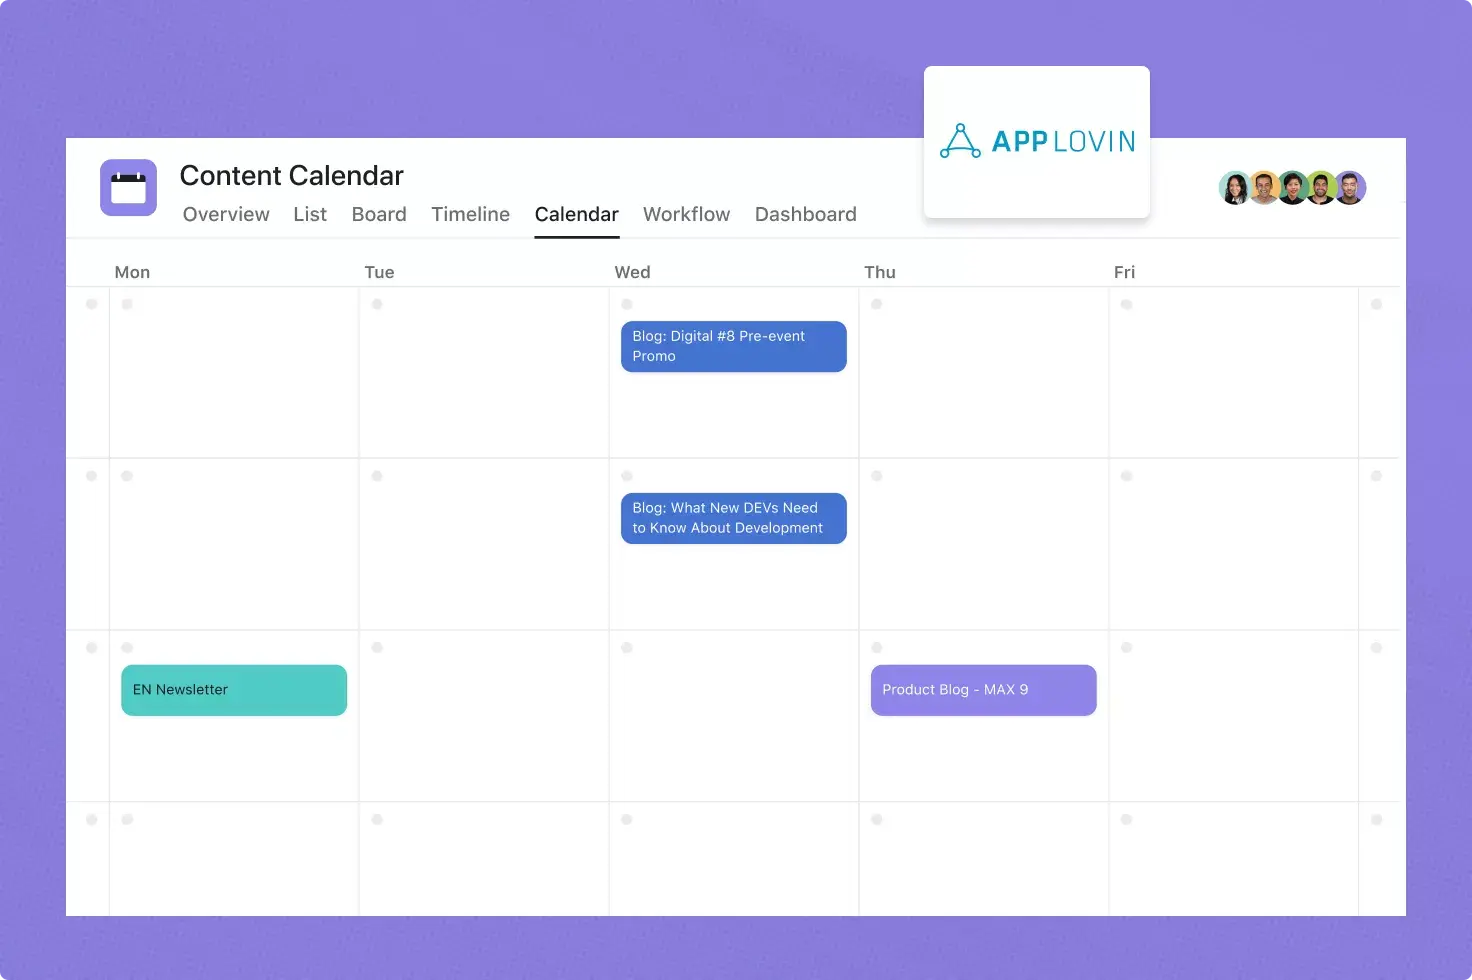 AppLovin uses Asana for their content calendar workflow